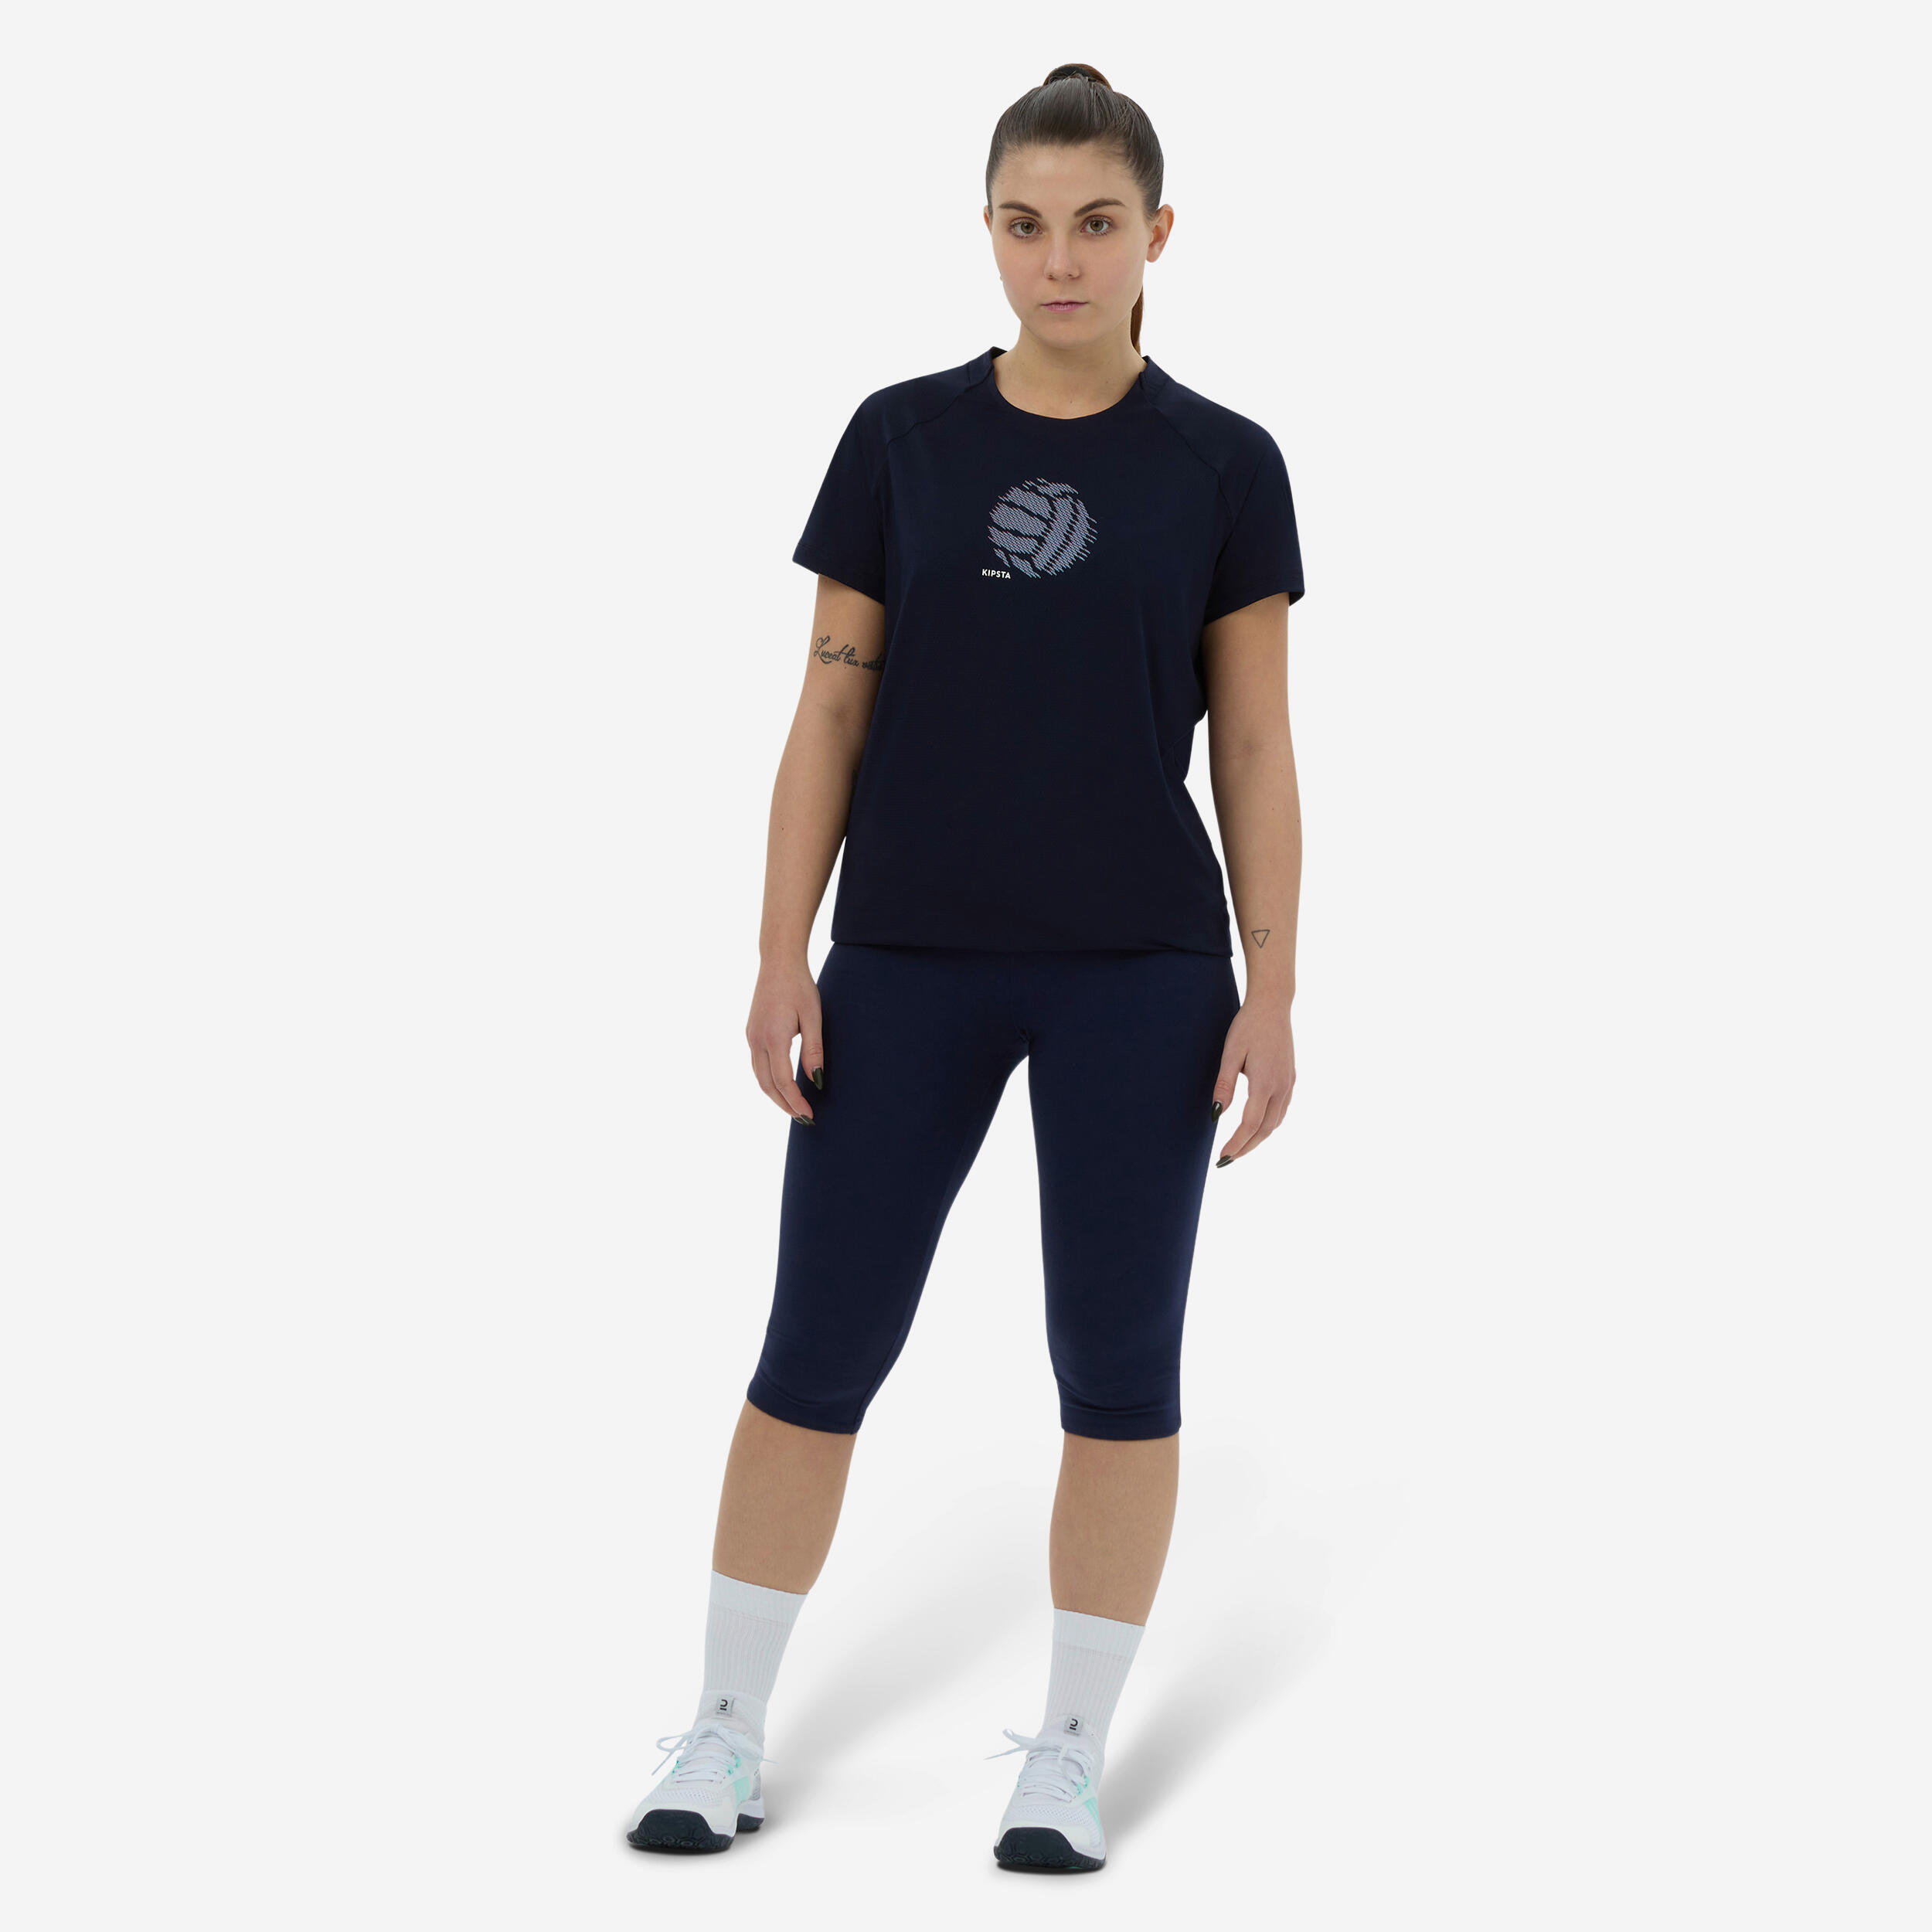 ALLSIX Women's Cotton Volleyball Leggings - Blue